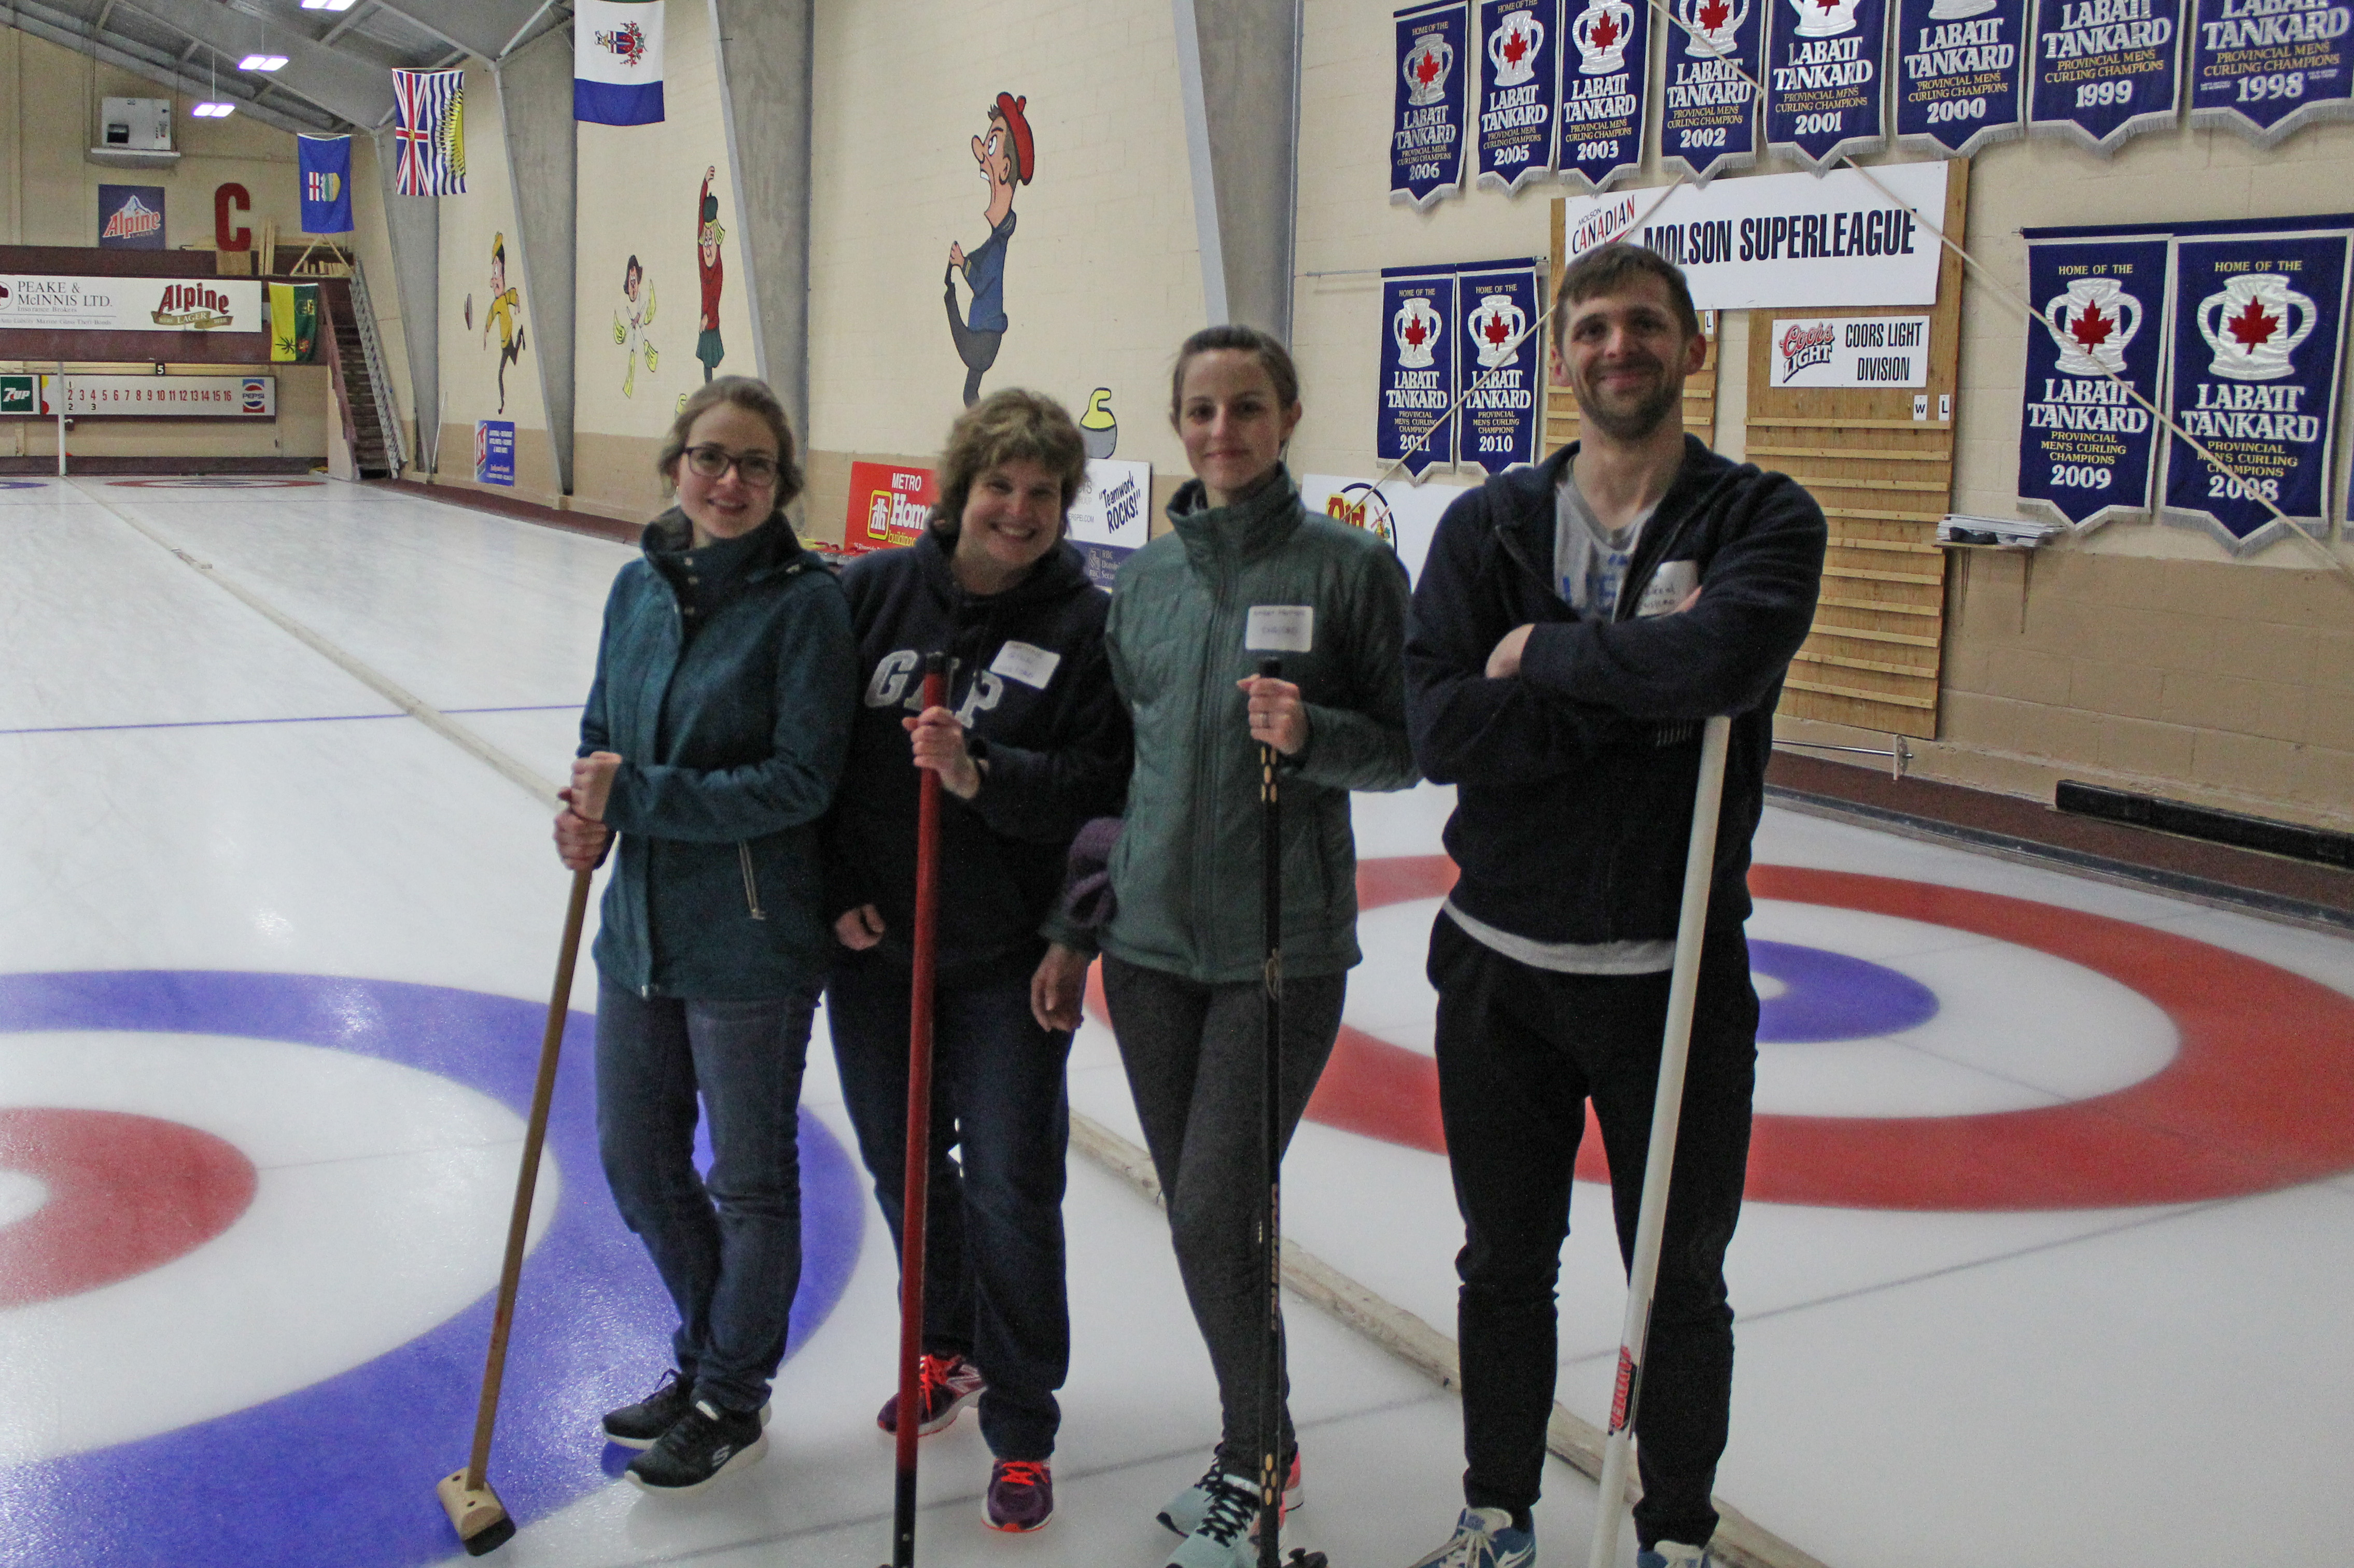 Team CNS|CRO Participates in the PEI BioAlliance Curling “Funspiel”